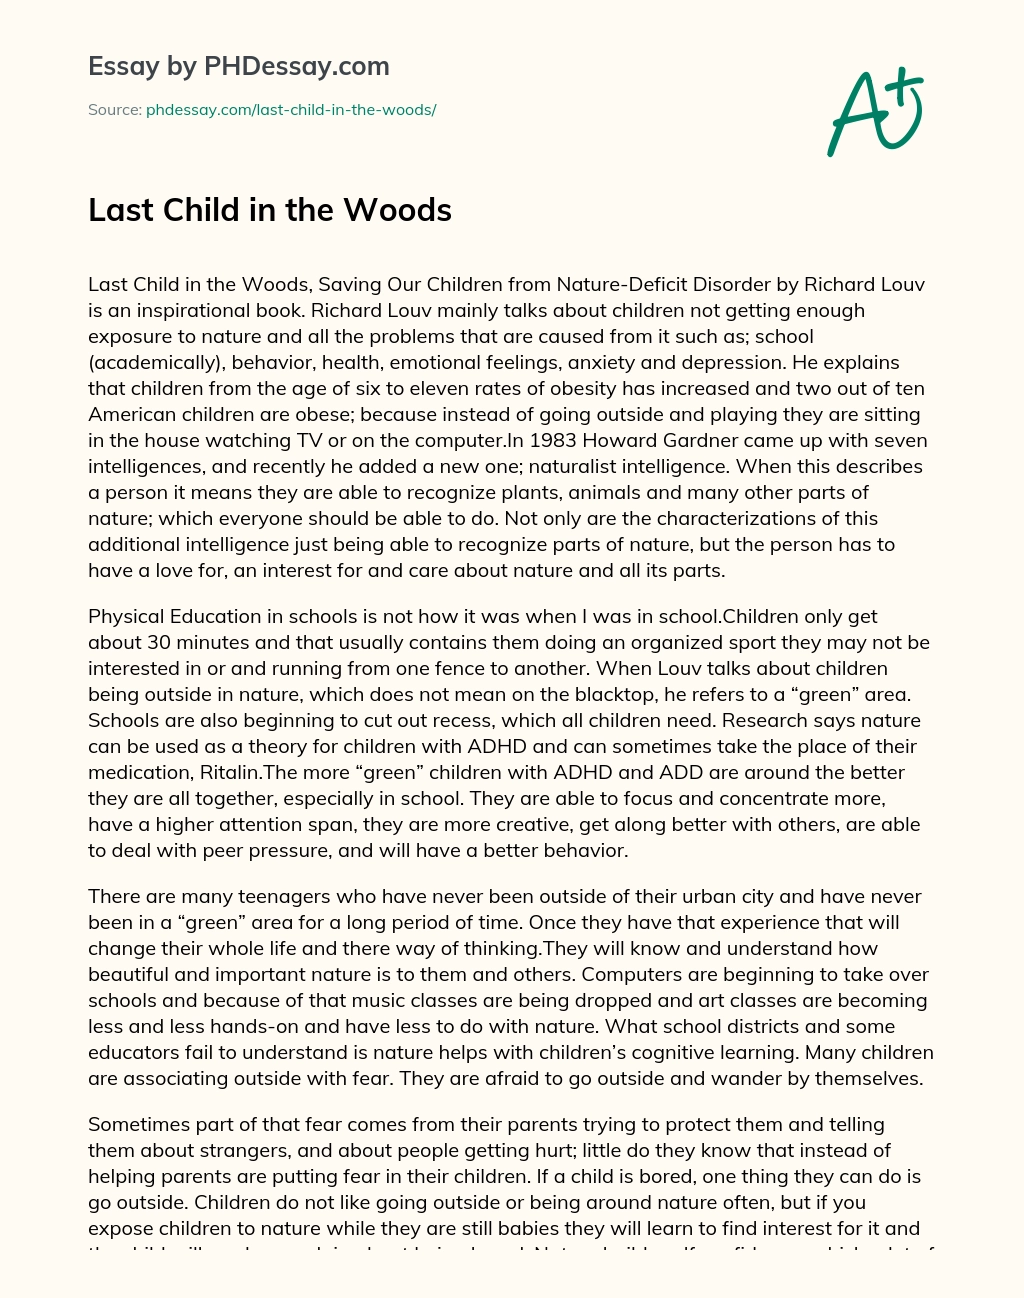 last child in the woods rhetorical analysis